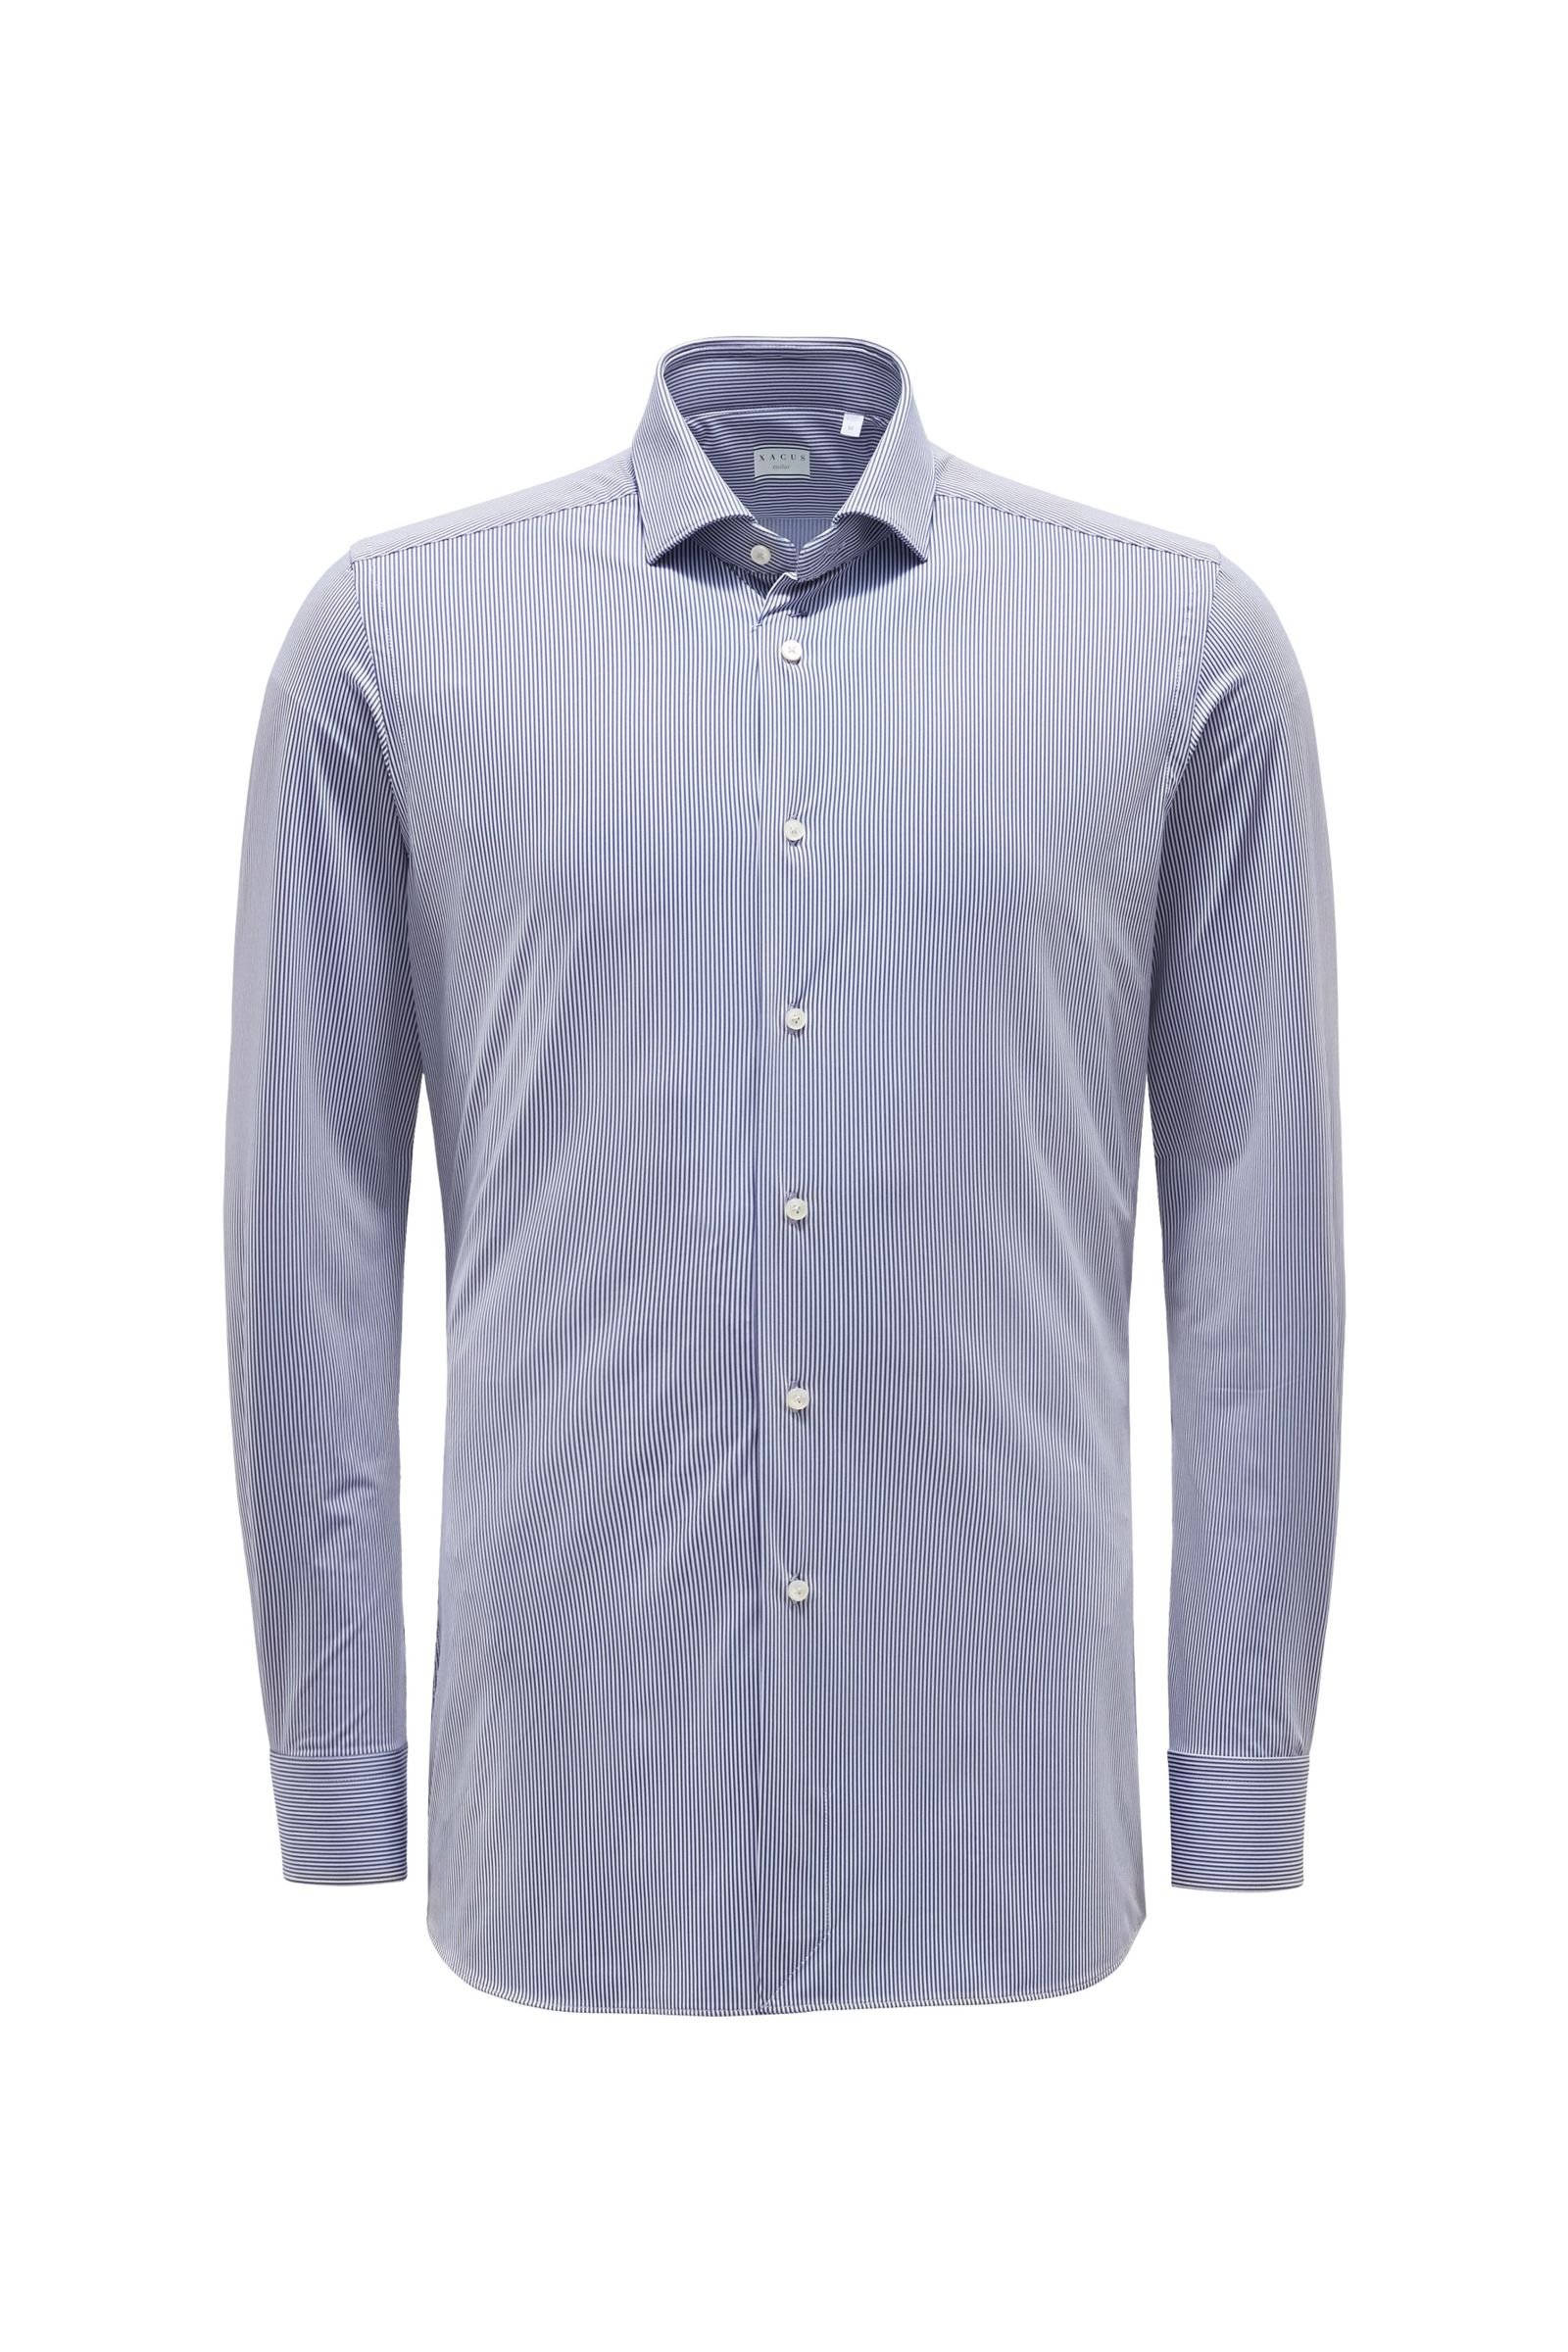 Casual shirt 'Tailor Active Shirt' shark collar navy/white striped